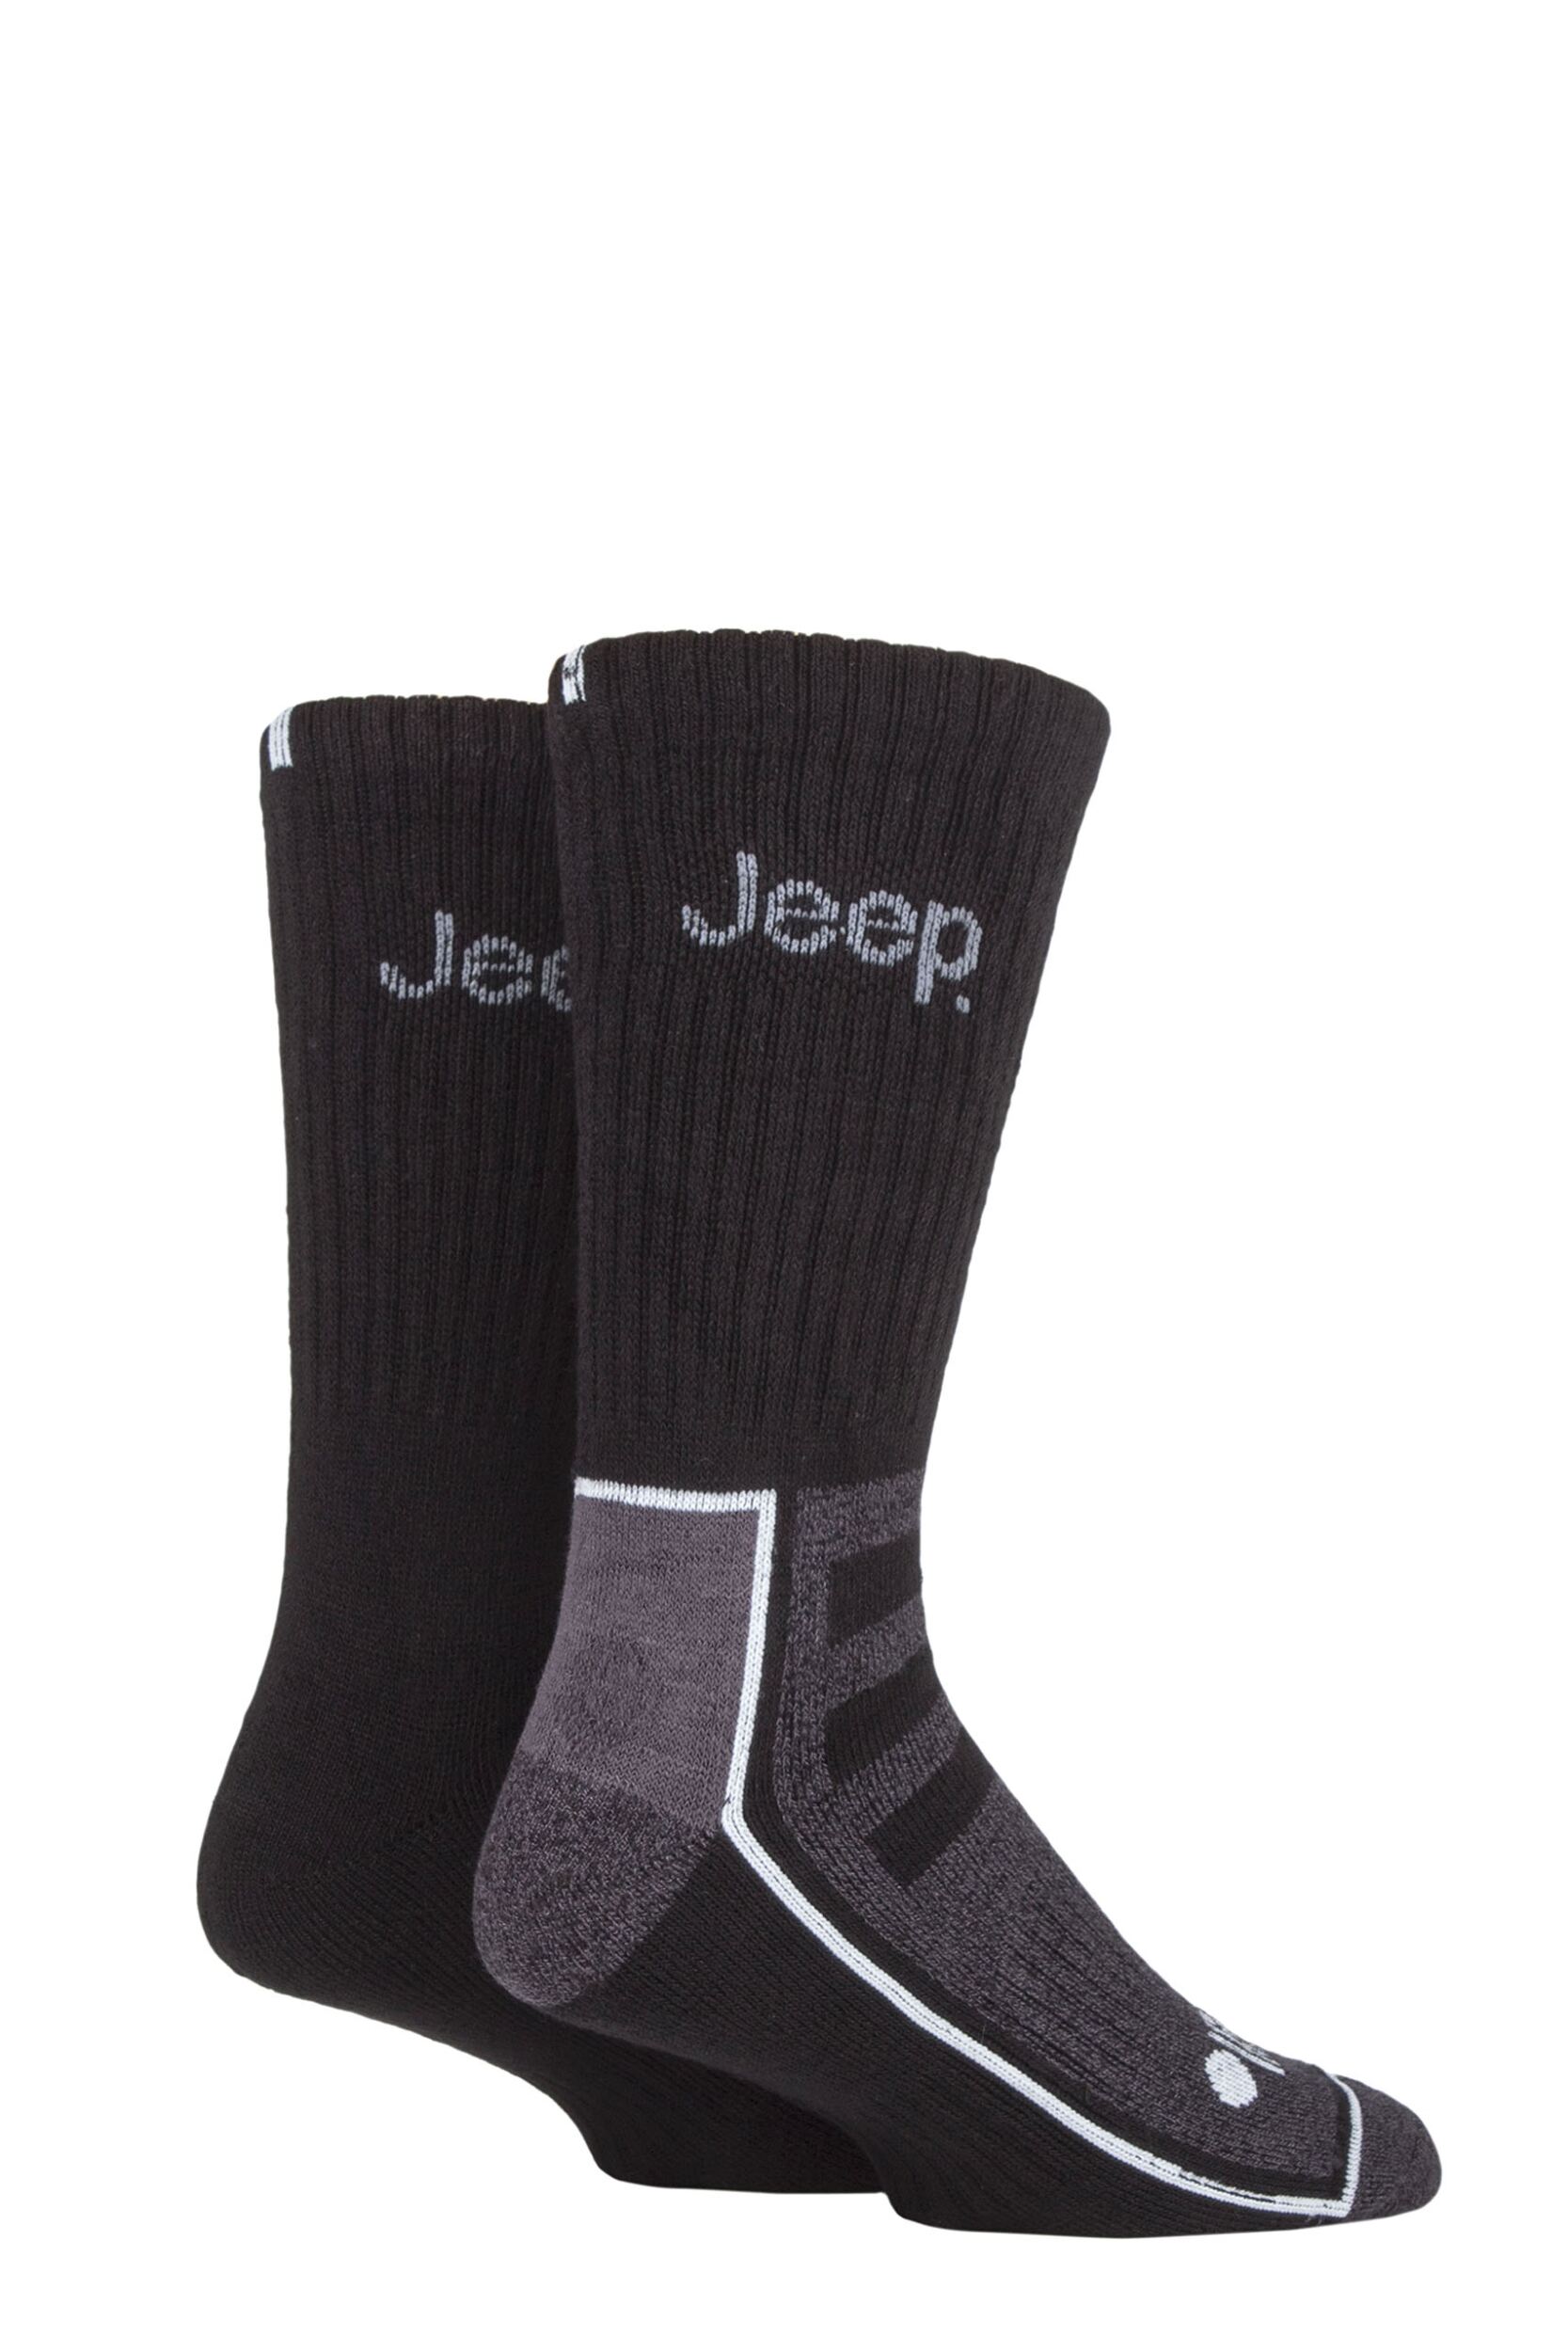 Mens 2 Pair Jeep Exclusive to SOCKSHOP Bamboo Boot Socks Black / Charcoal 6-11 Mens